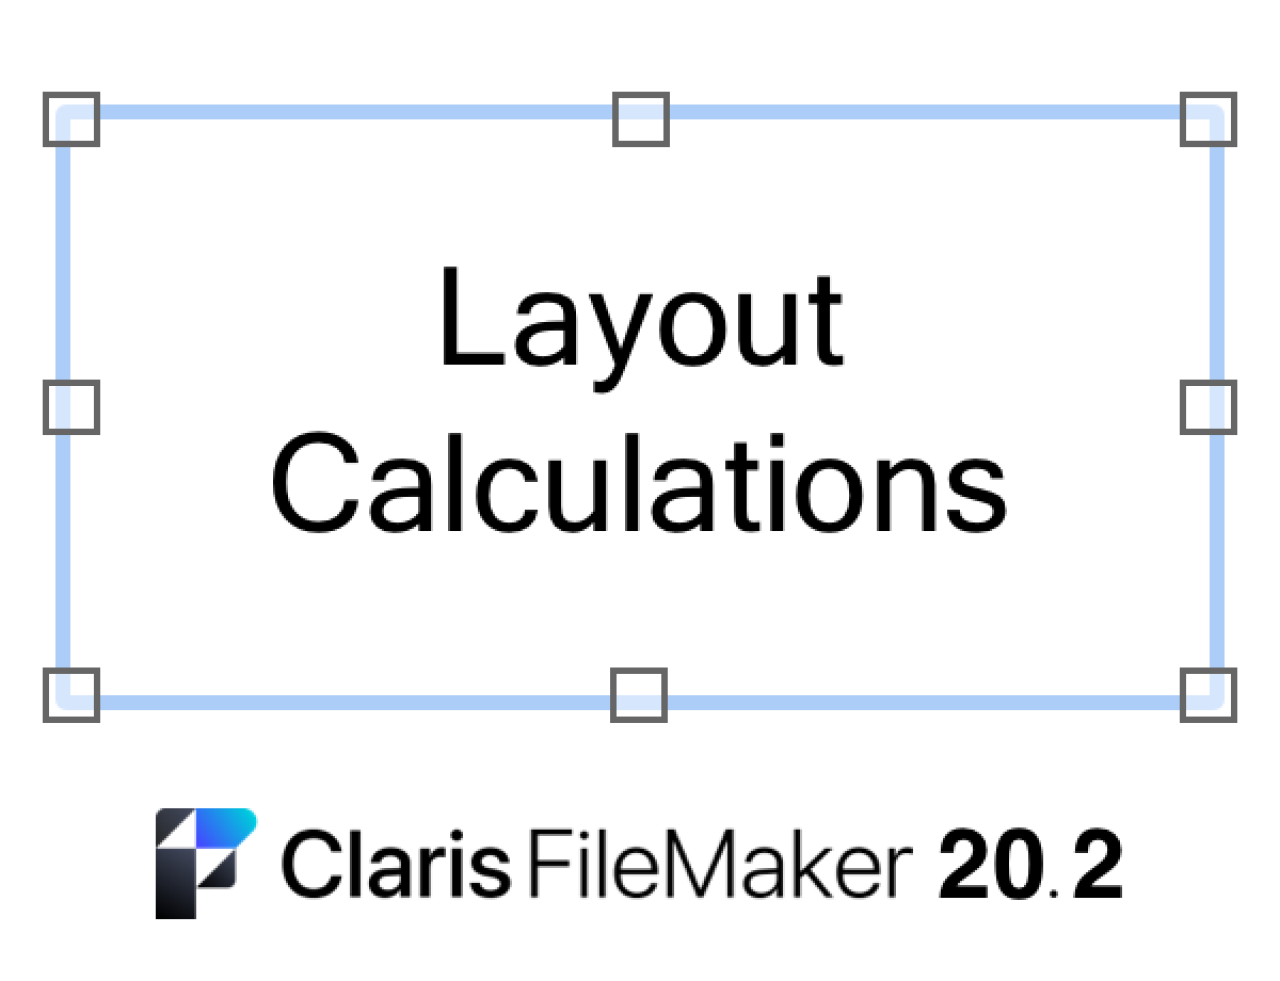 claris filemaker 20.2 layout calculations.